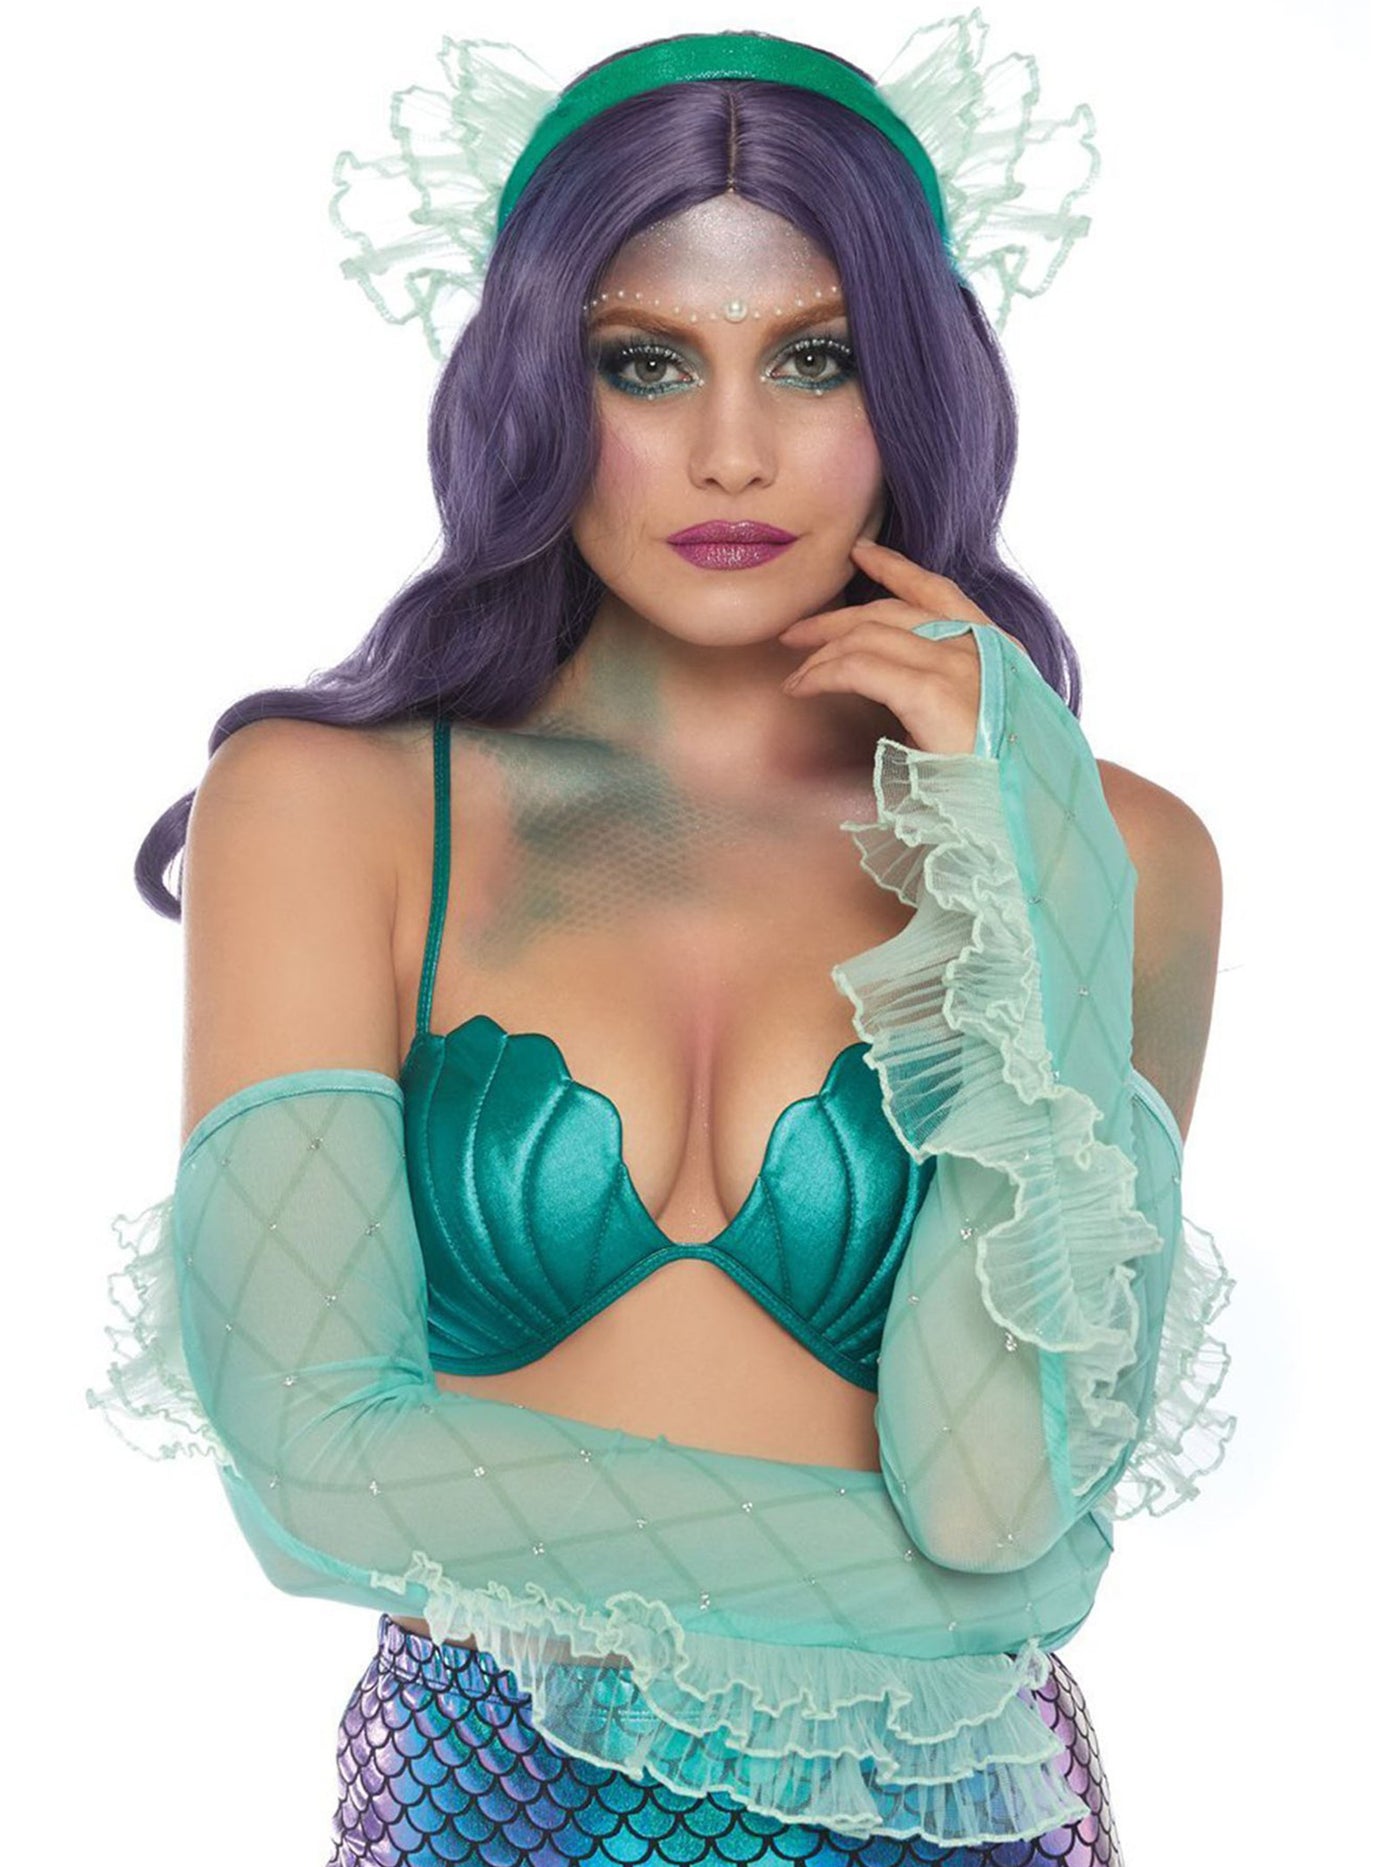 Sea Foam Green 2 Piece Mermaid Accessories Kit Ruffled Fin Ears & Gloves - Shop Fortune Costumes Lingerie